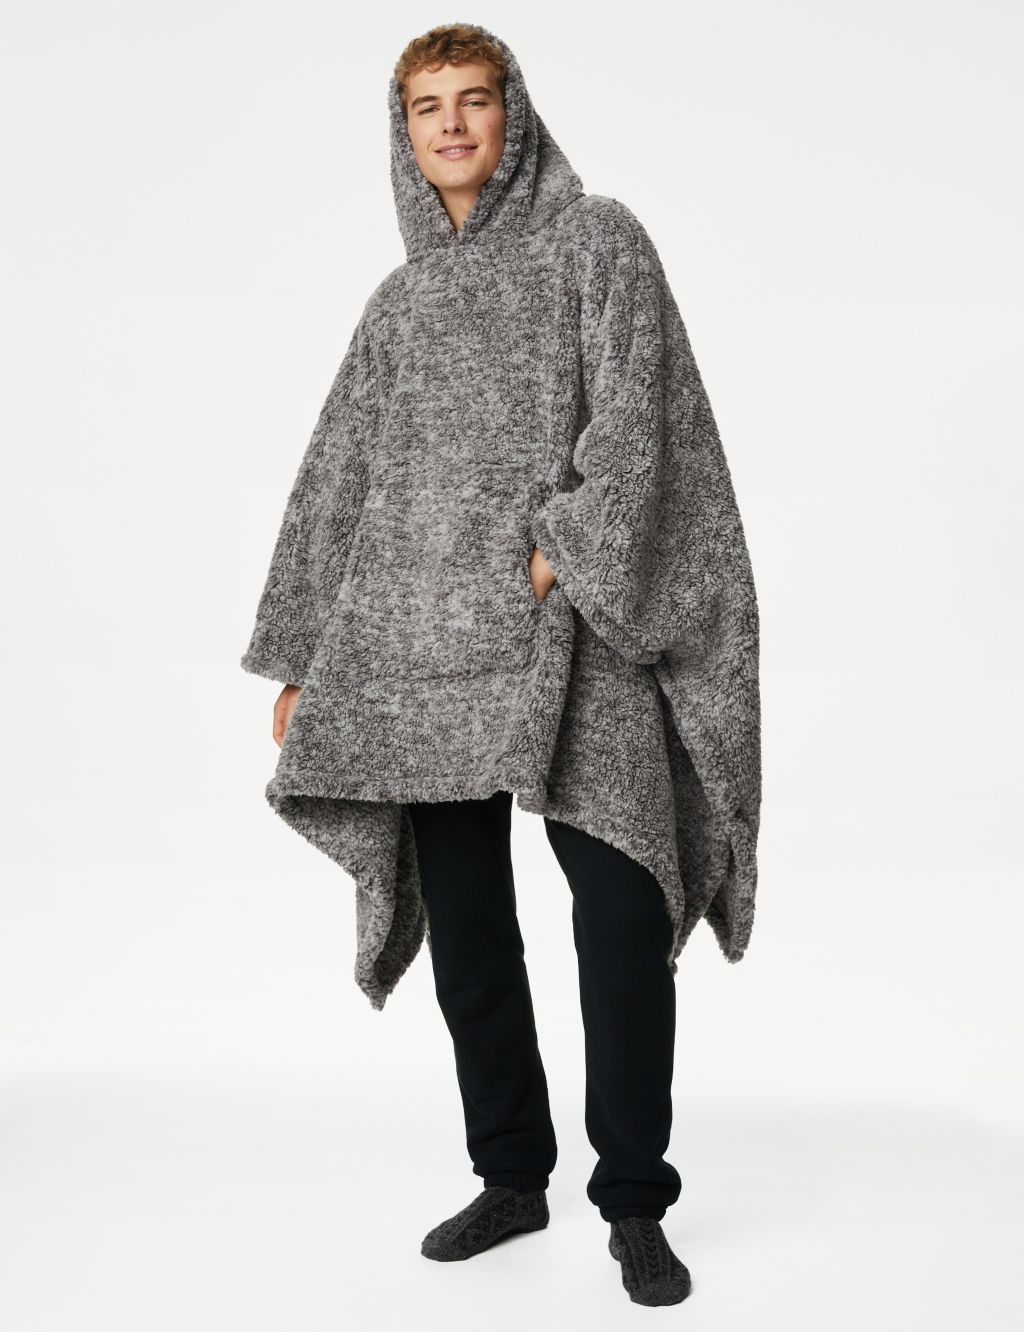 Teddy Fleece Hooded Blanket, The M&S Snuggle™